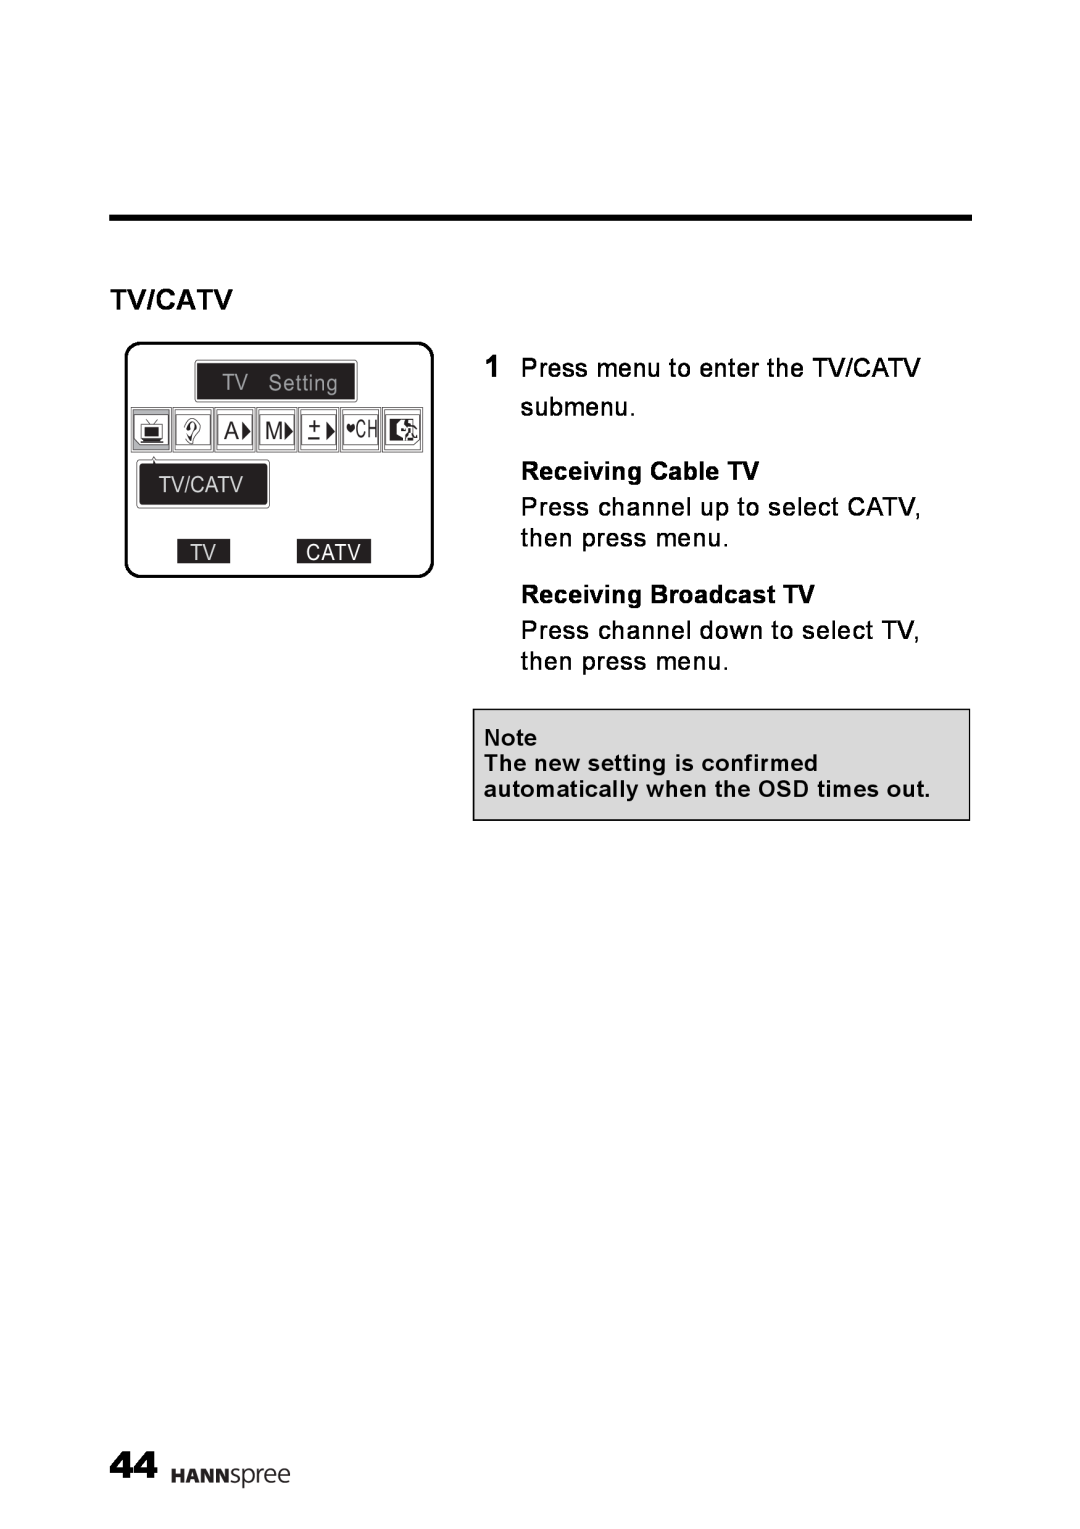 HANNspree LT02-12U1-000 user manual Tv/Catv, Receiving Cable TV, Receiving Broadcast TV, Setting 